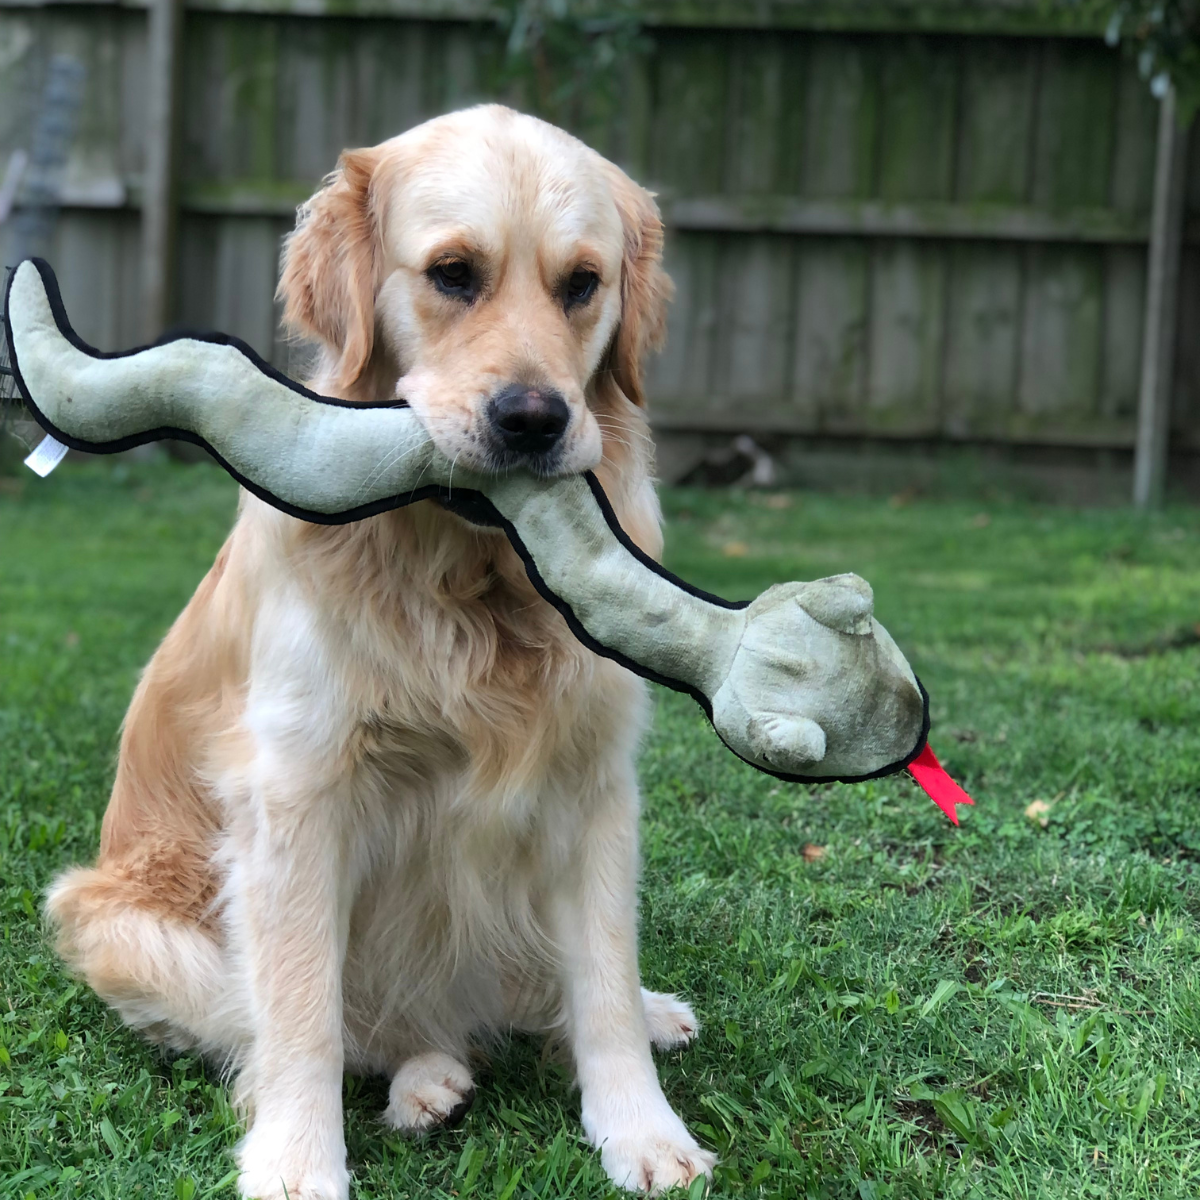 Plush Snake Dog Toy